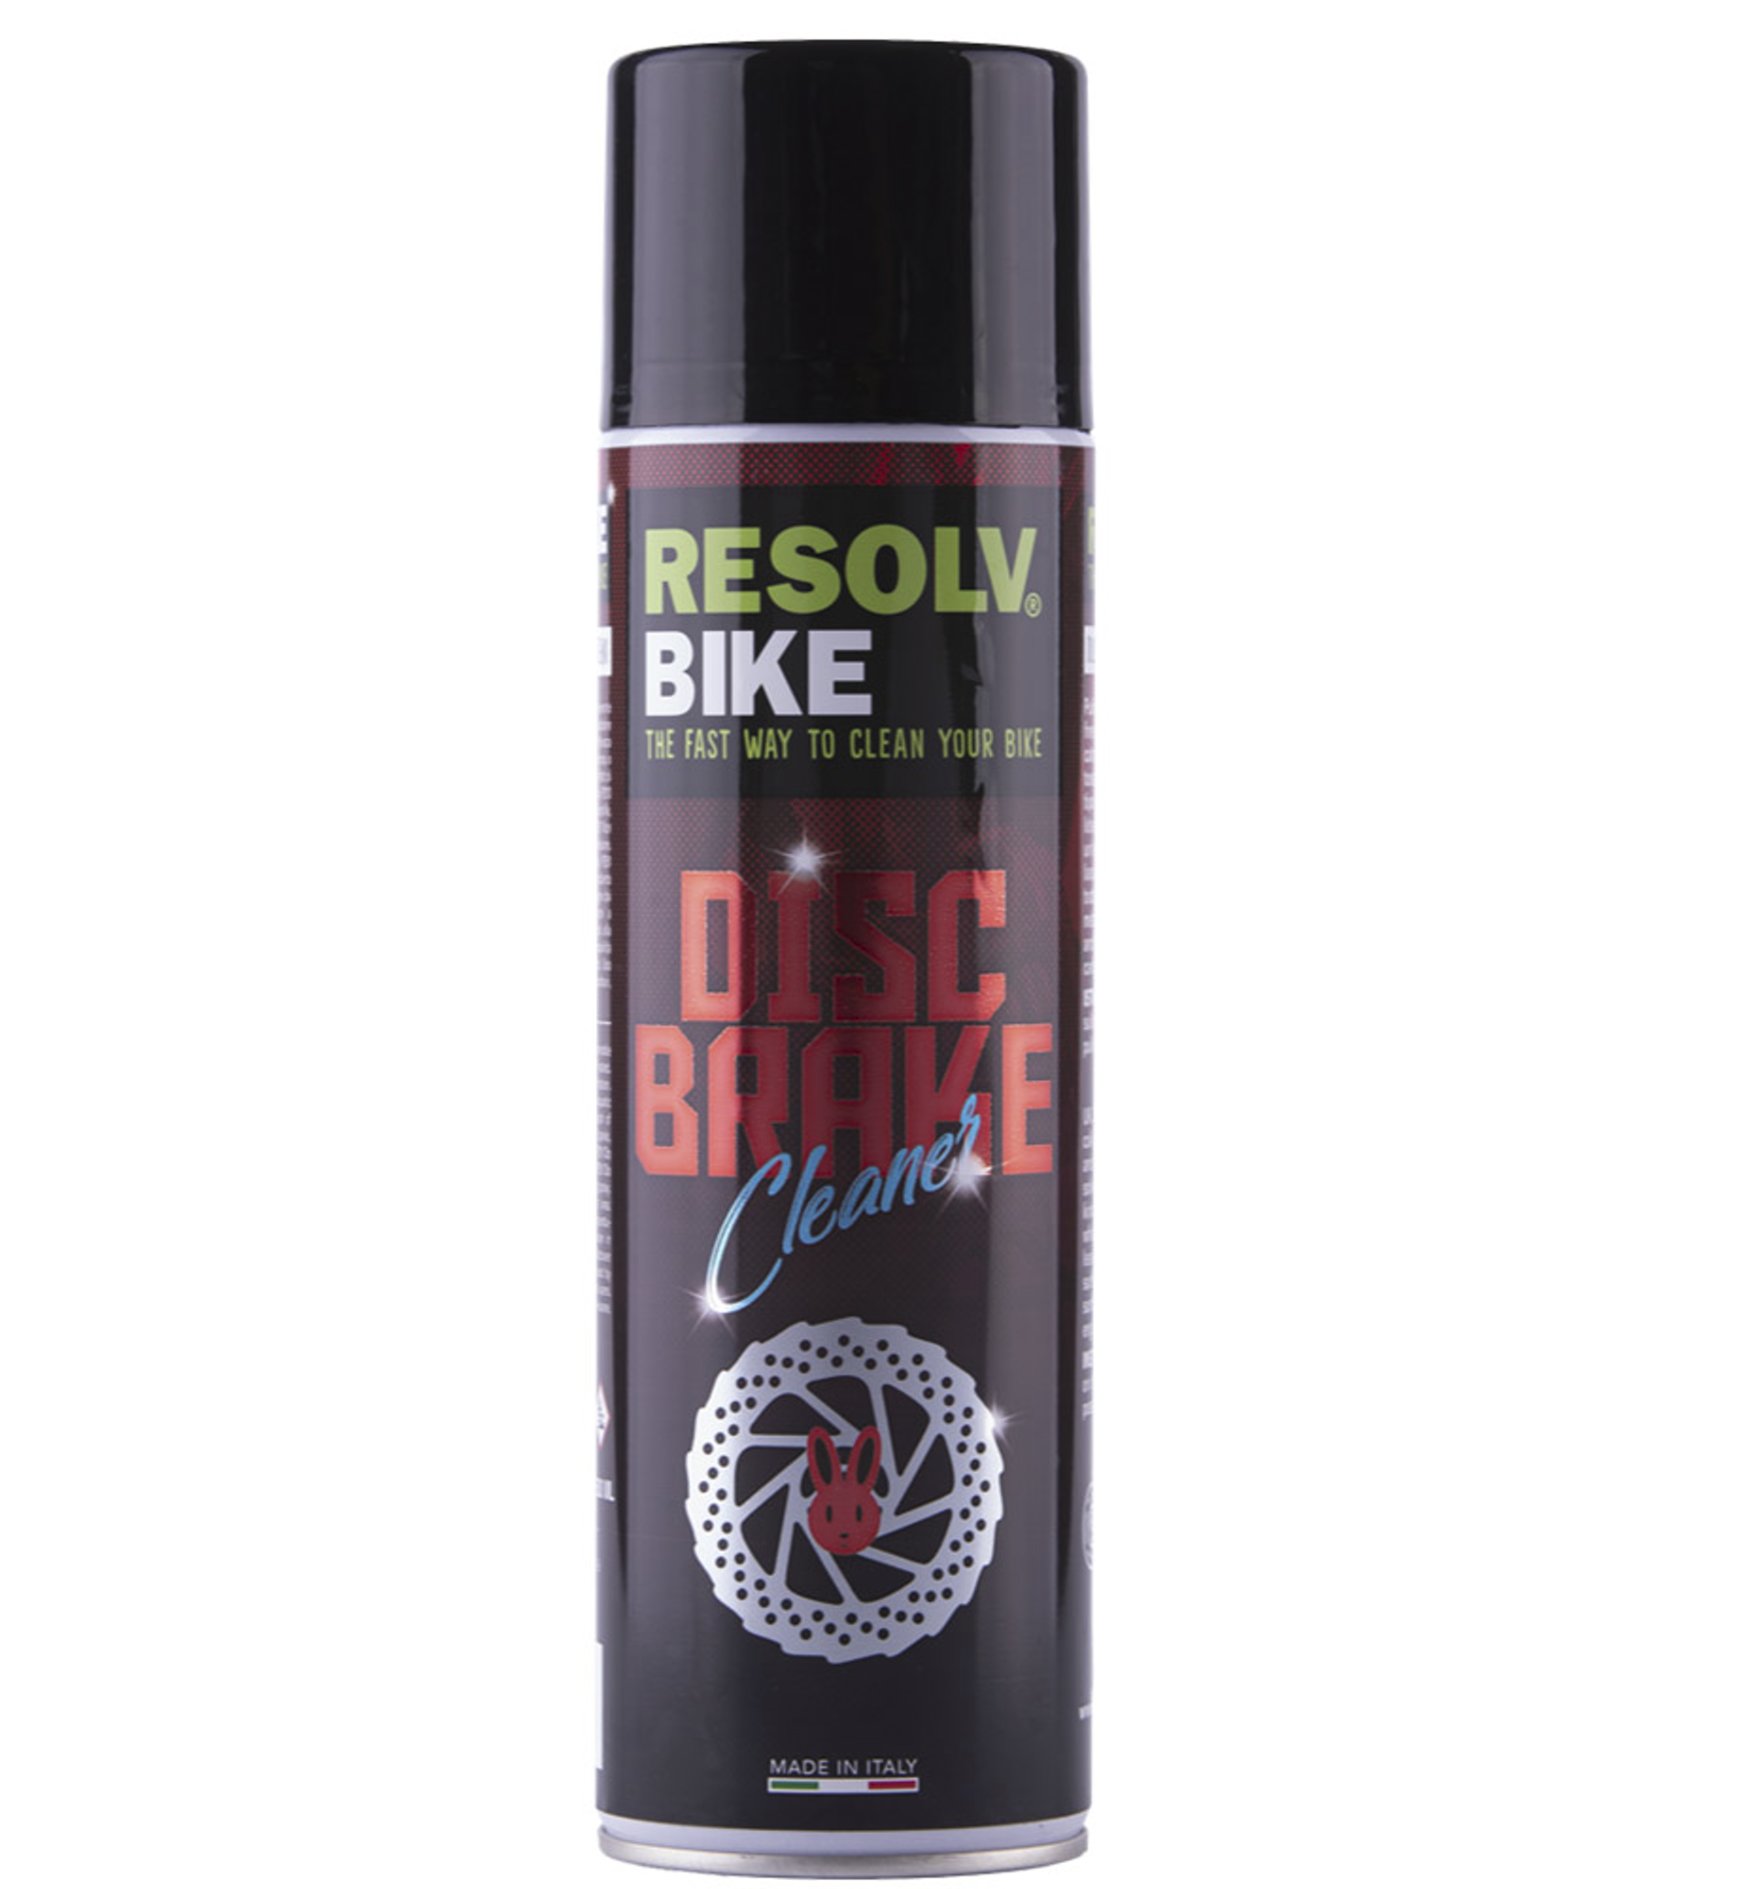 Resolvbike Brake 500 ml Fahrrad Pflegemittel